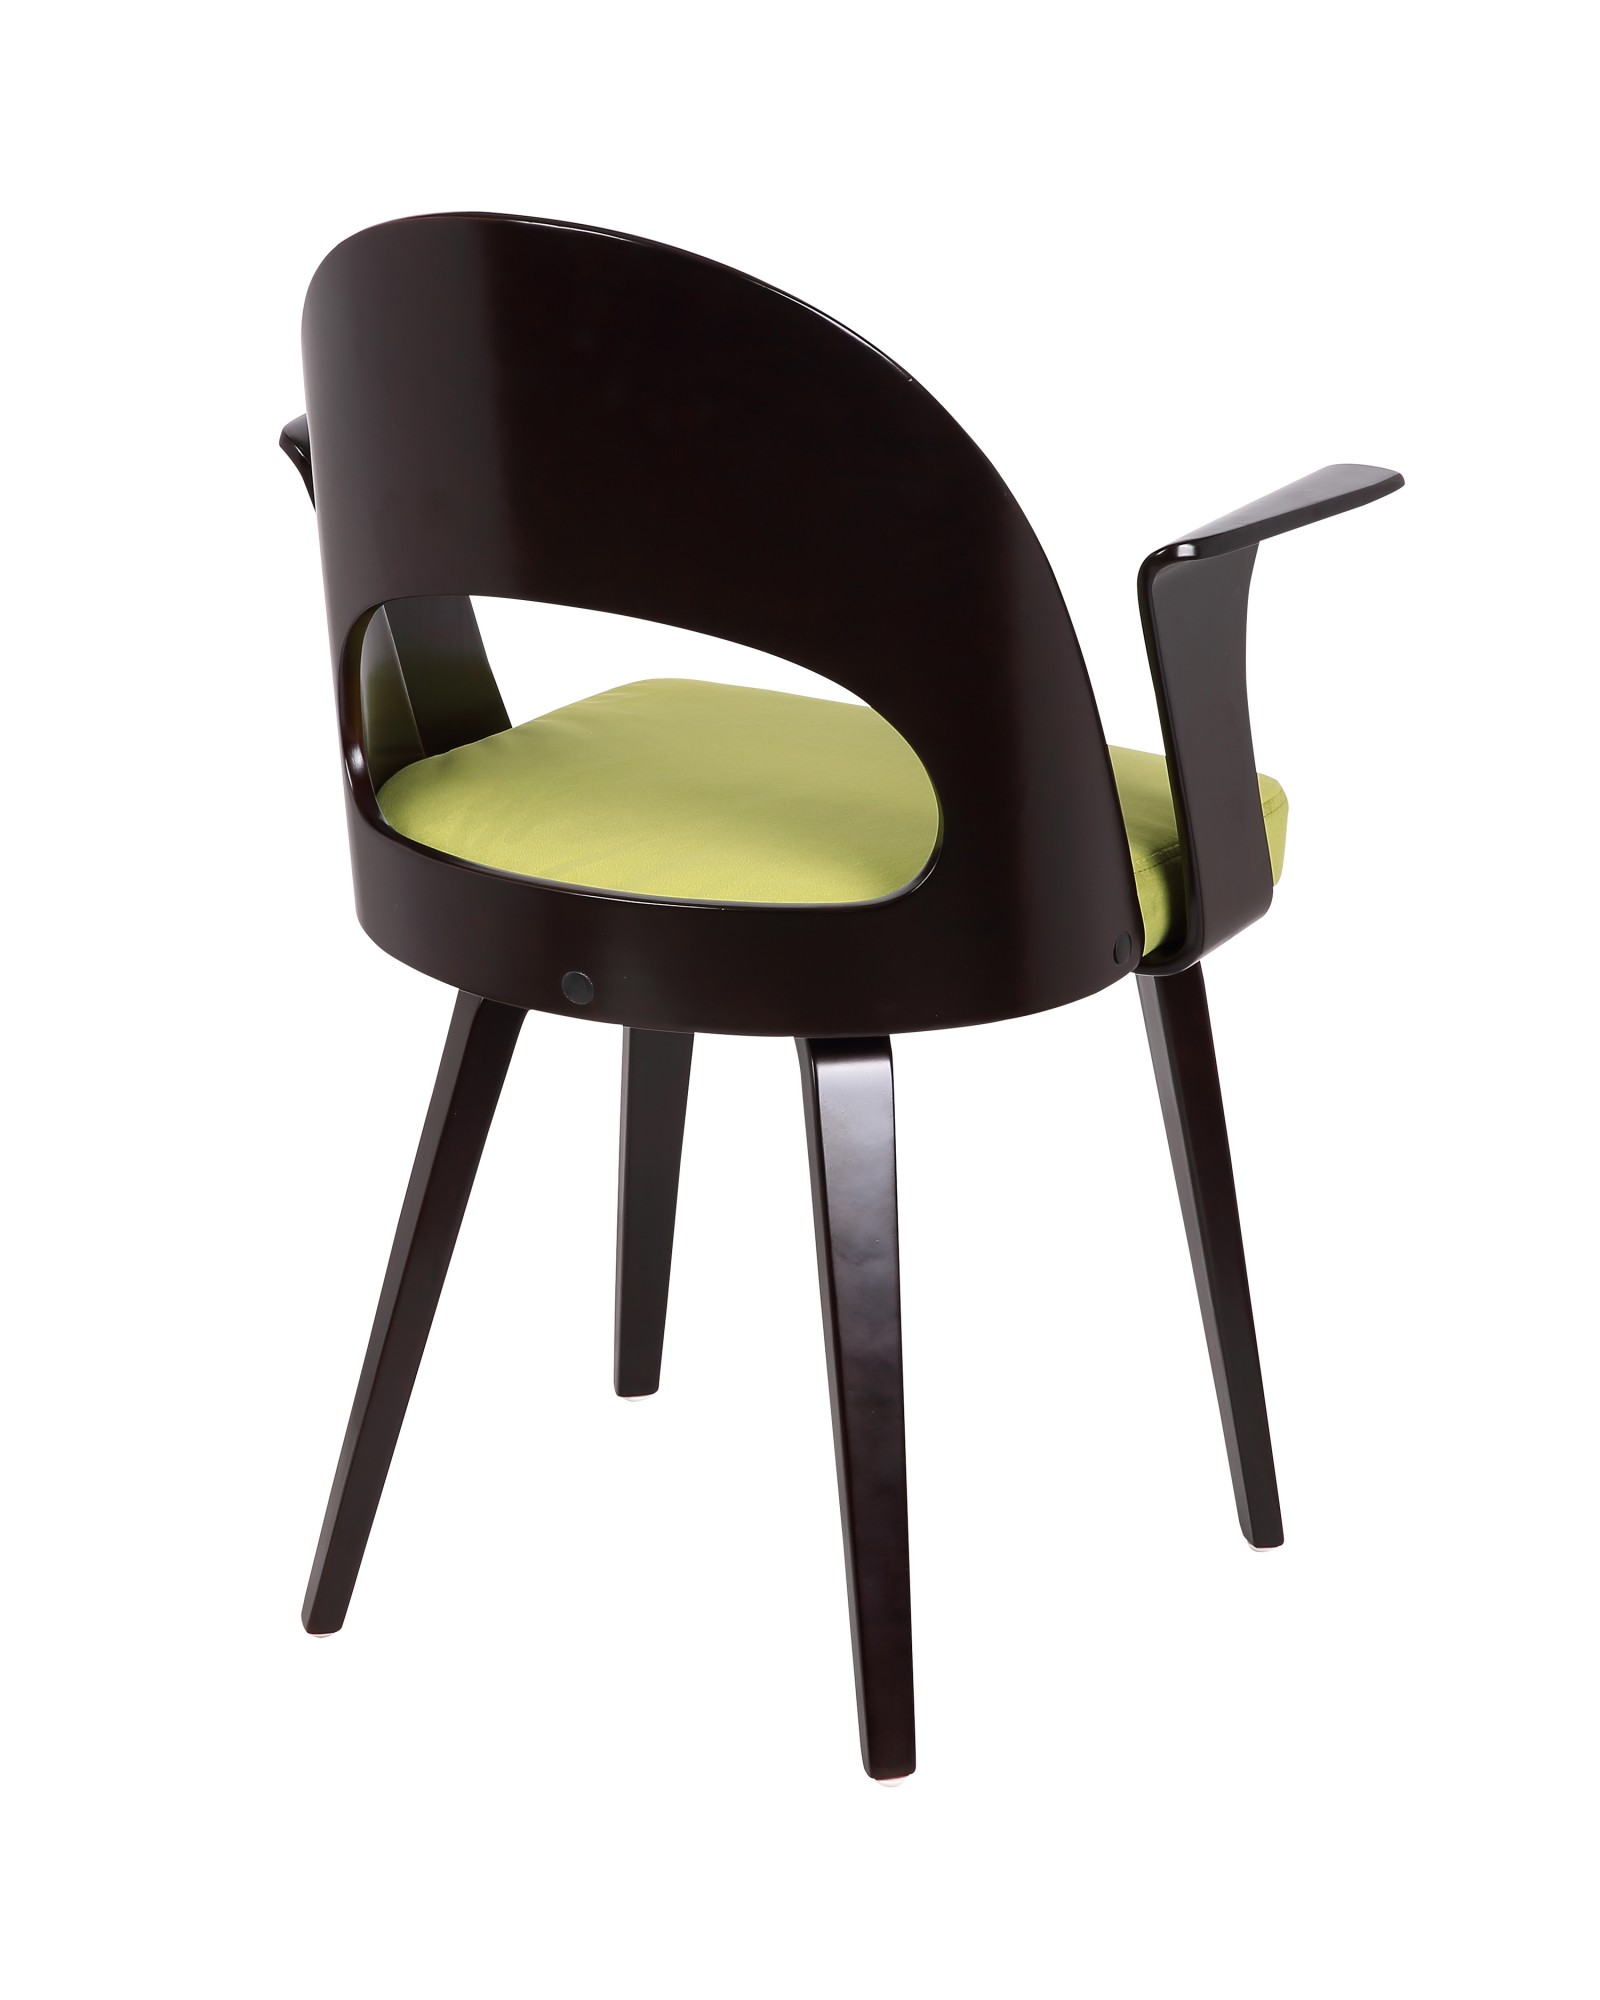 Verino Mid-Century Modern Dining/Accent Chair in Espresso with Green Velvet